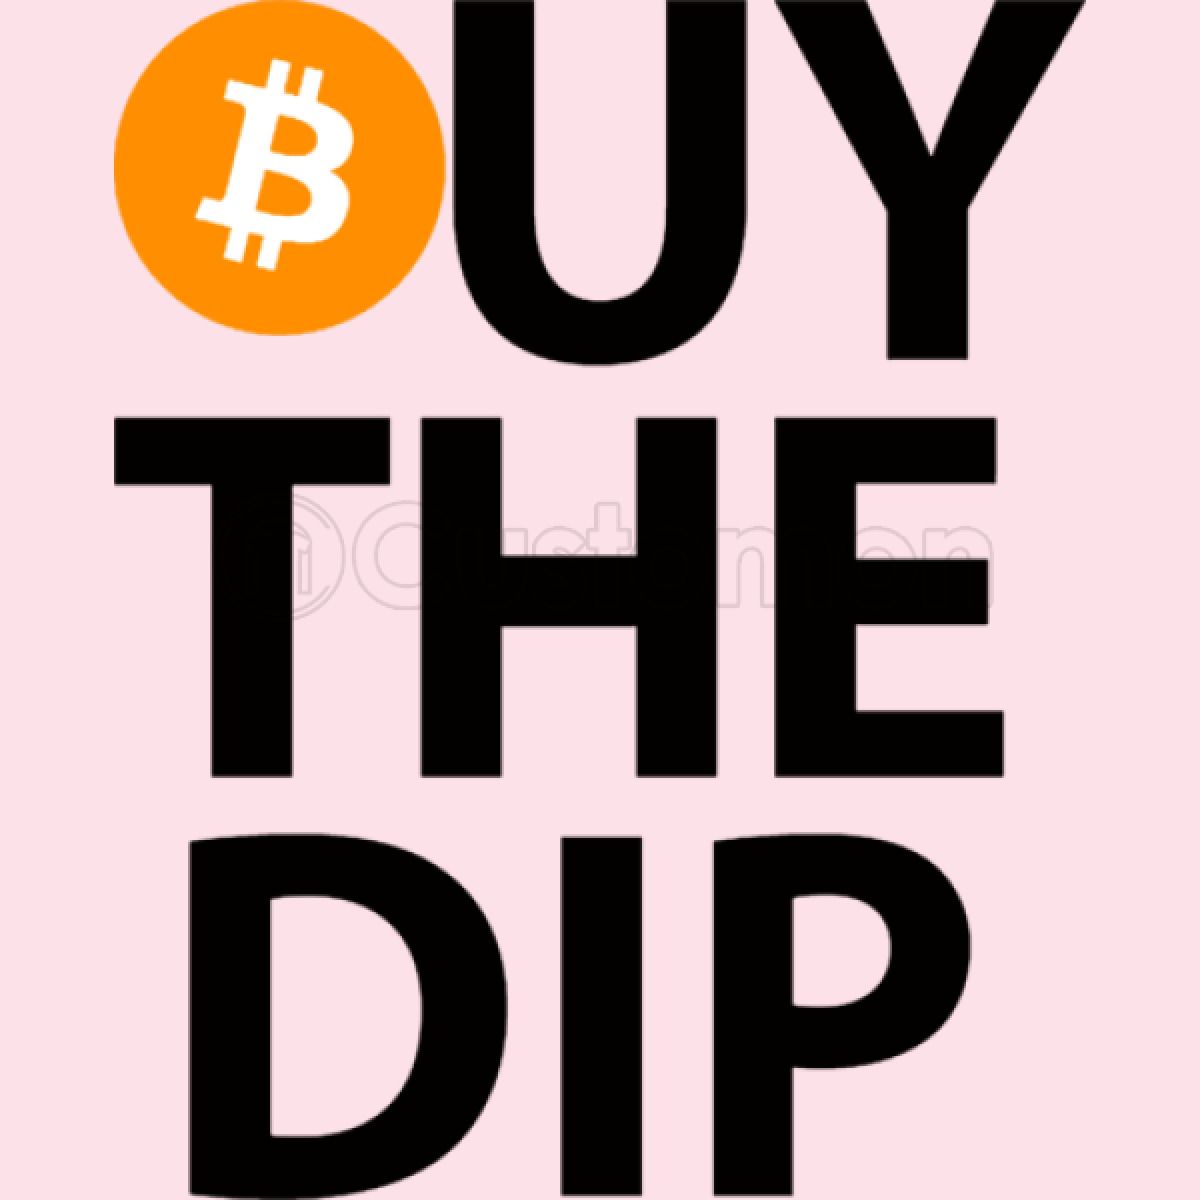 bitcoin buy the dip